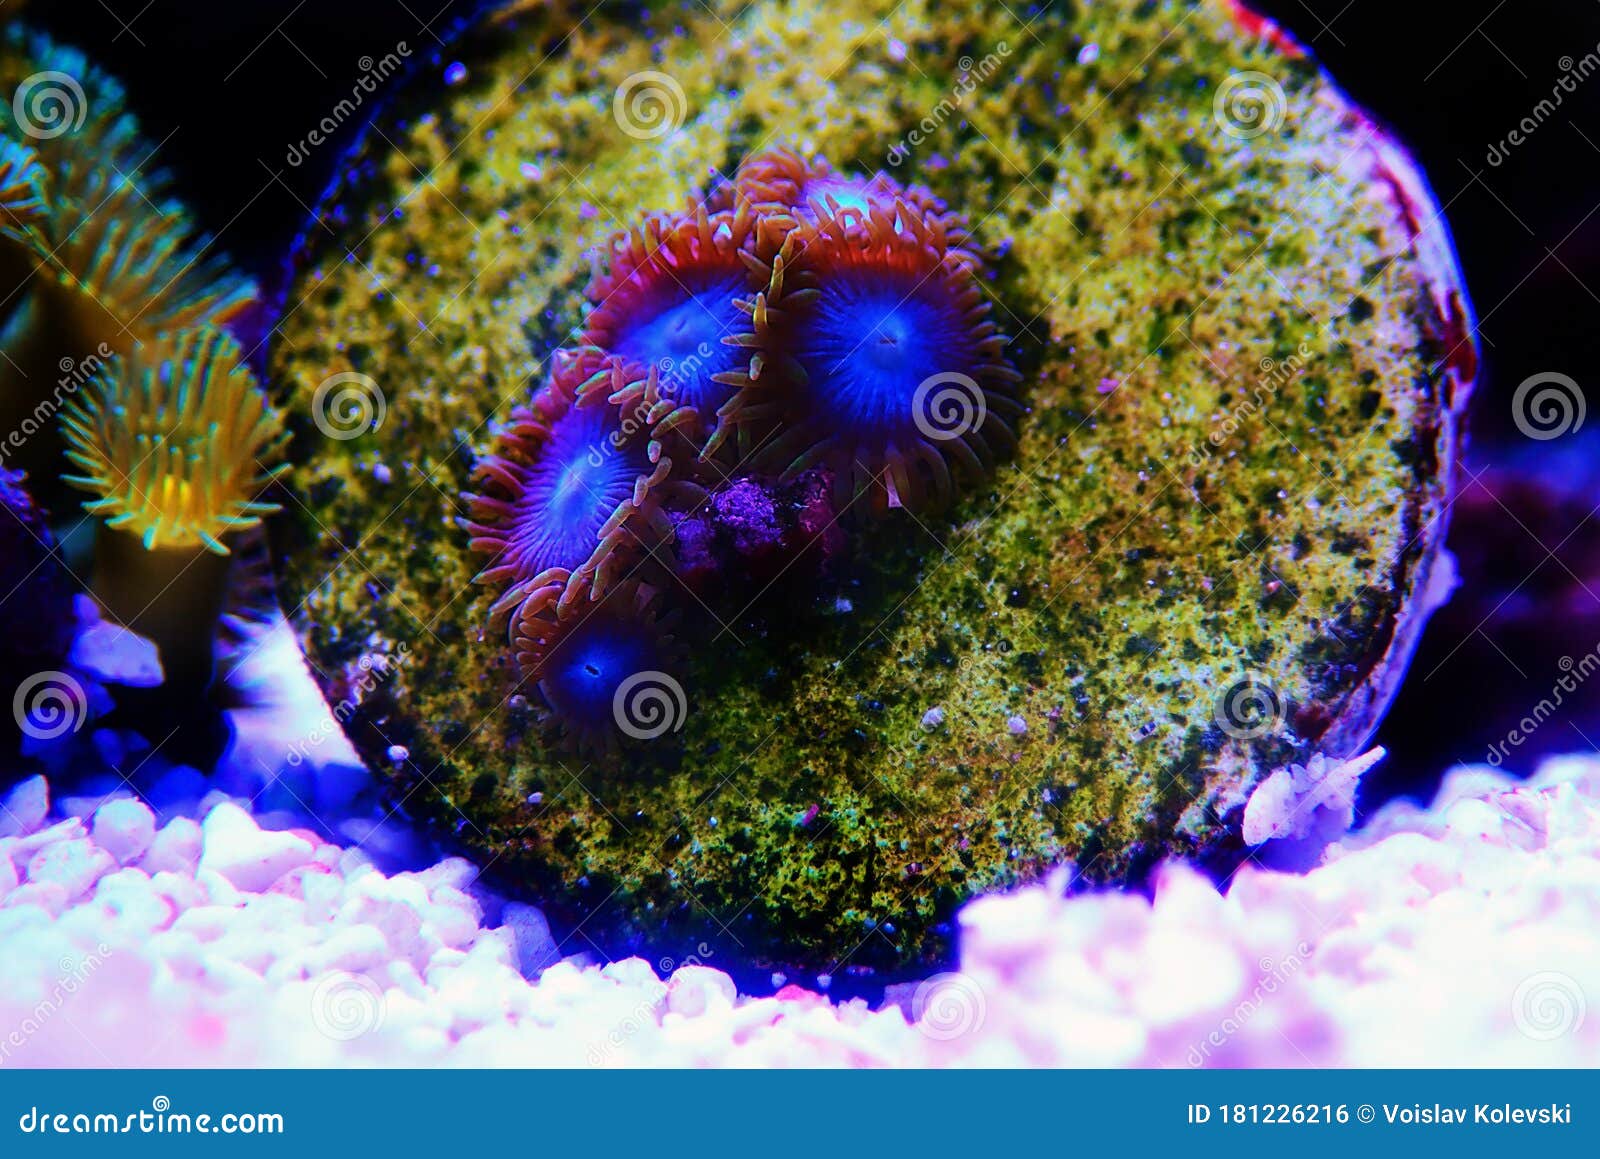 blue smurf caribbean zoanthus polyps on macro underwater photography scene